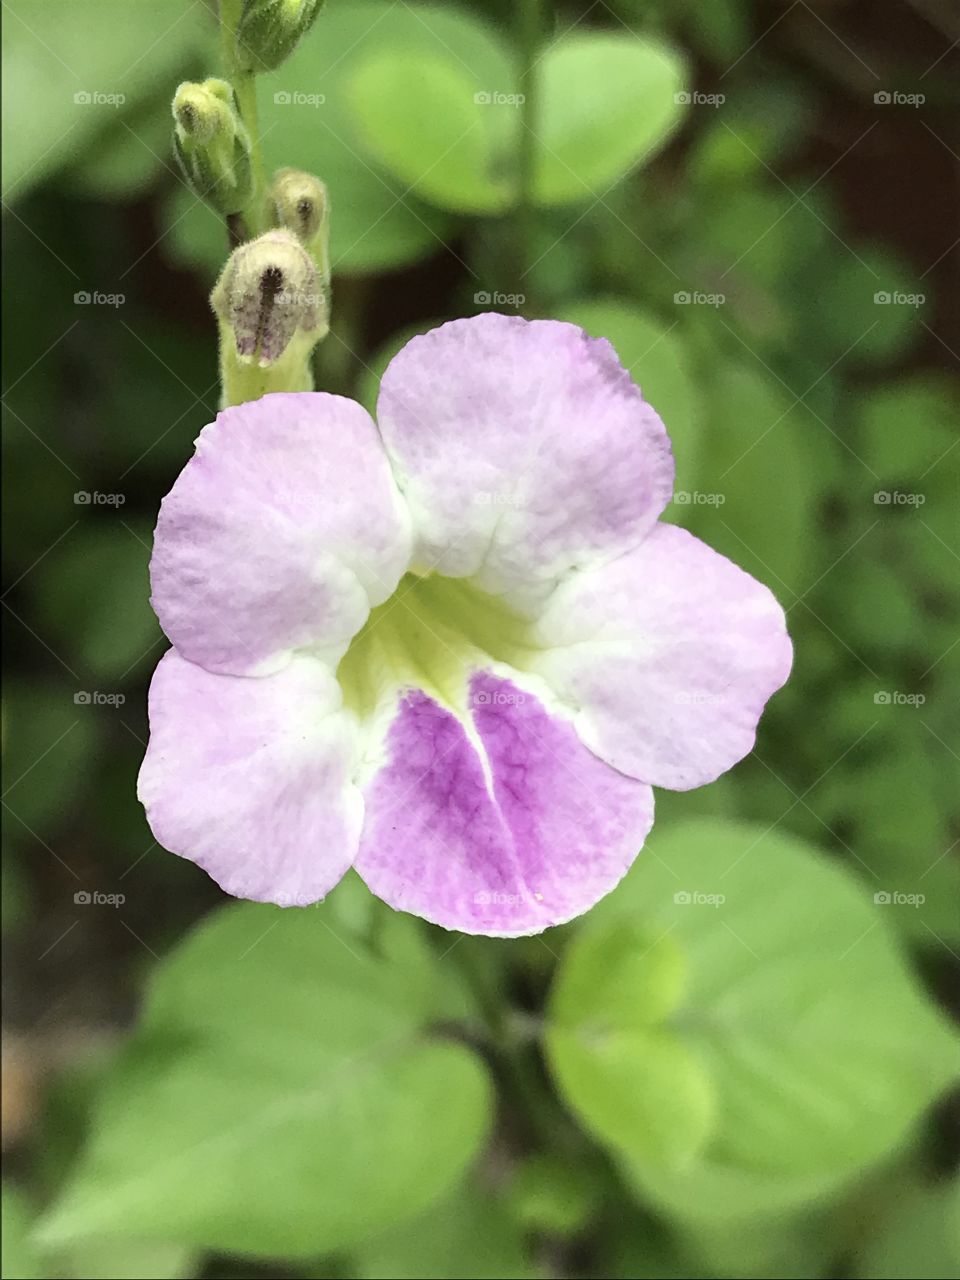 A beautiful purple flower of the green tropics.